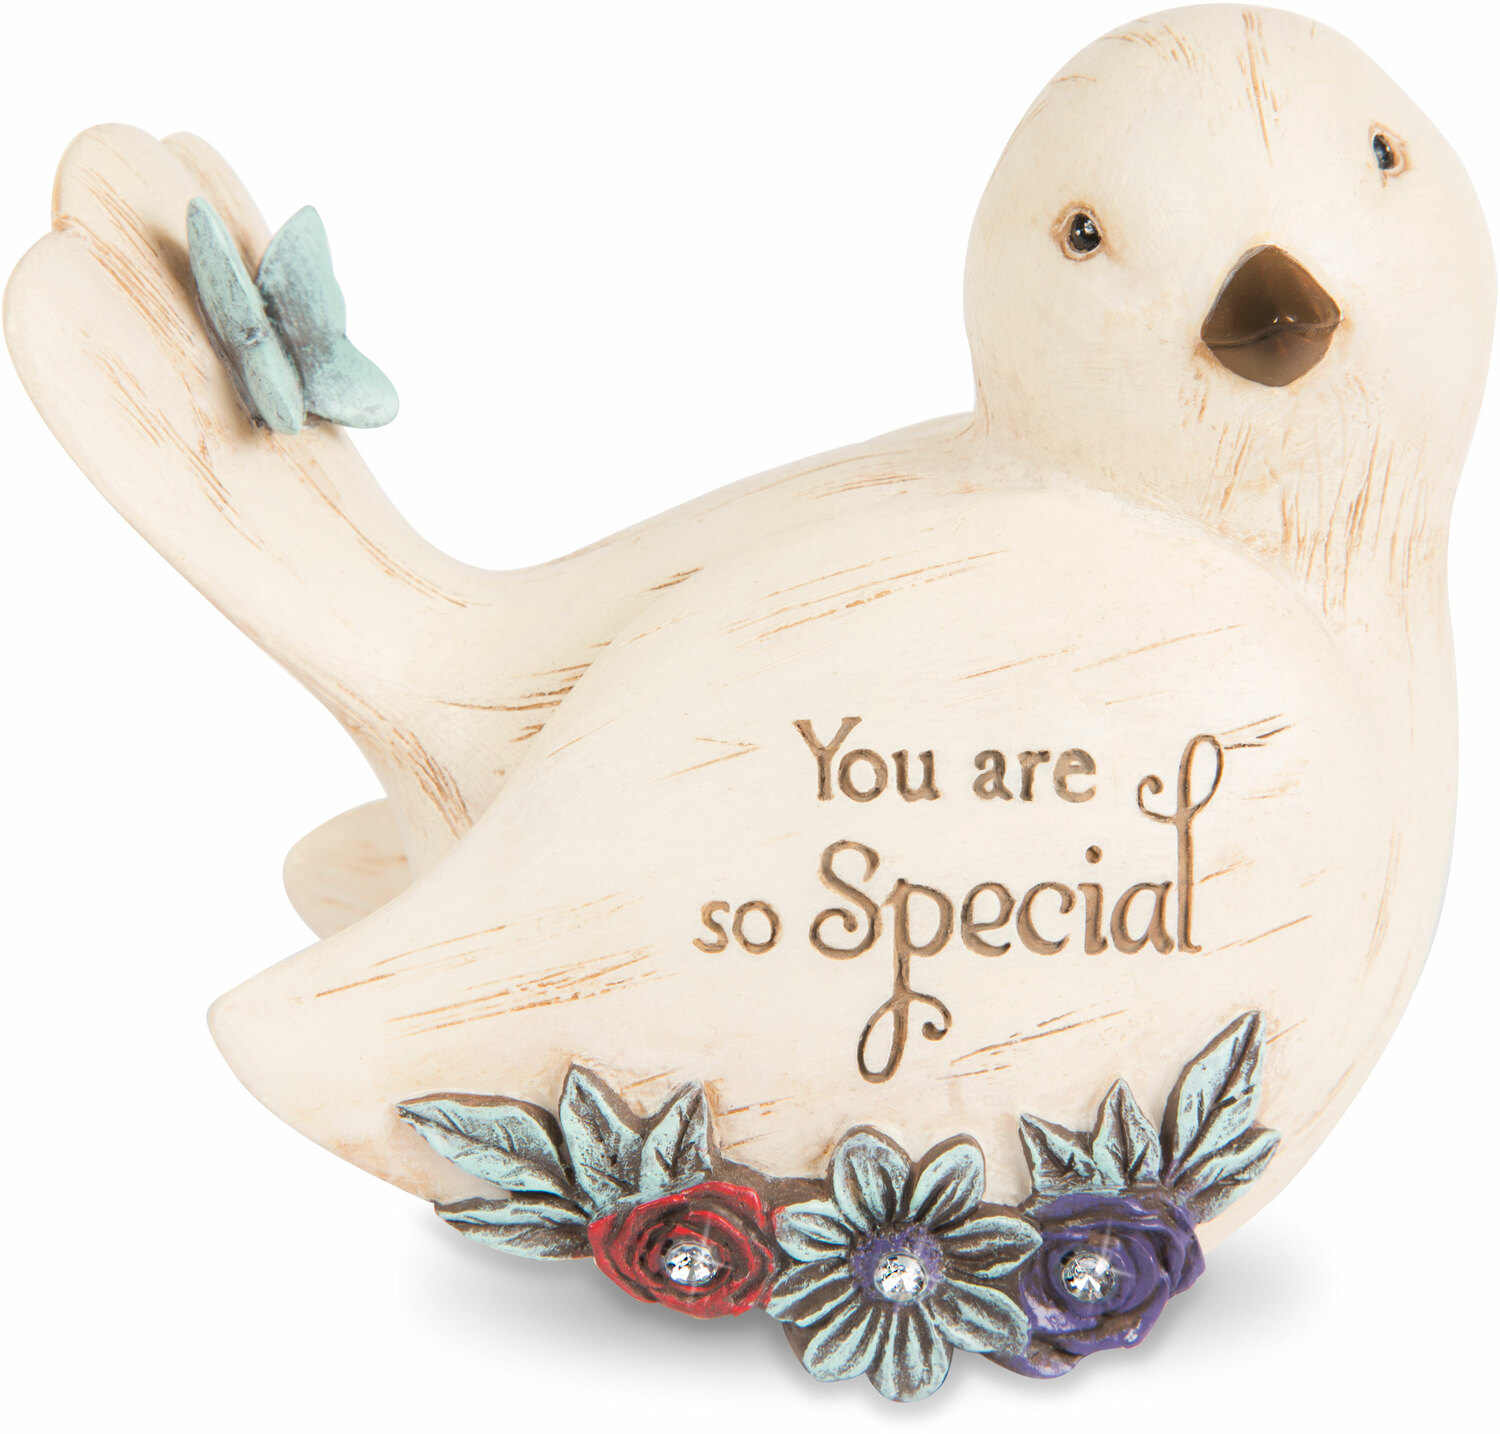 So Special by Simple Spirits - So Special - 3.5" Bird Figurine